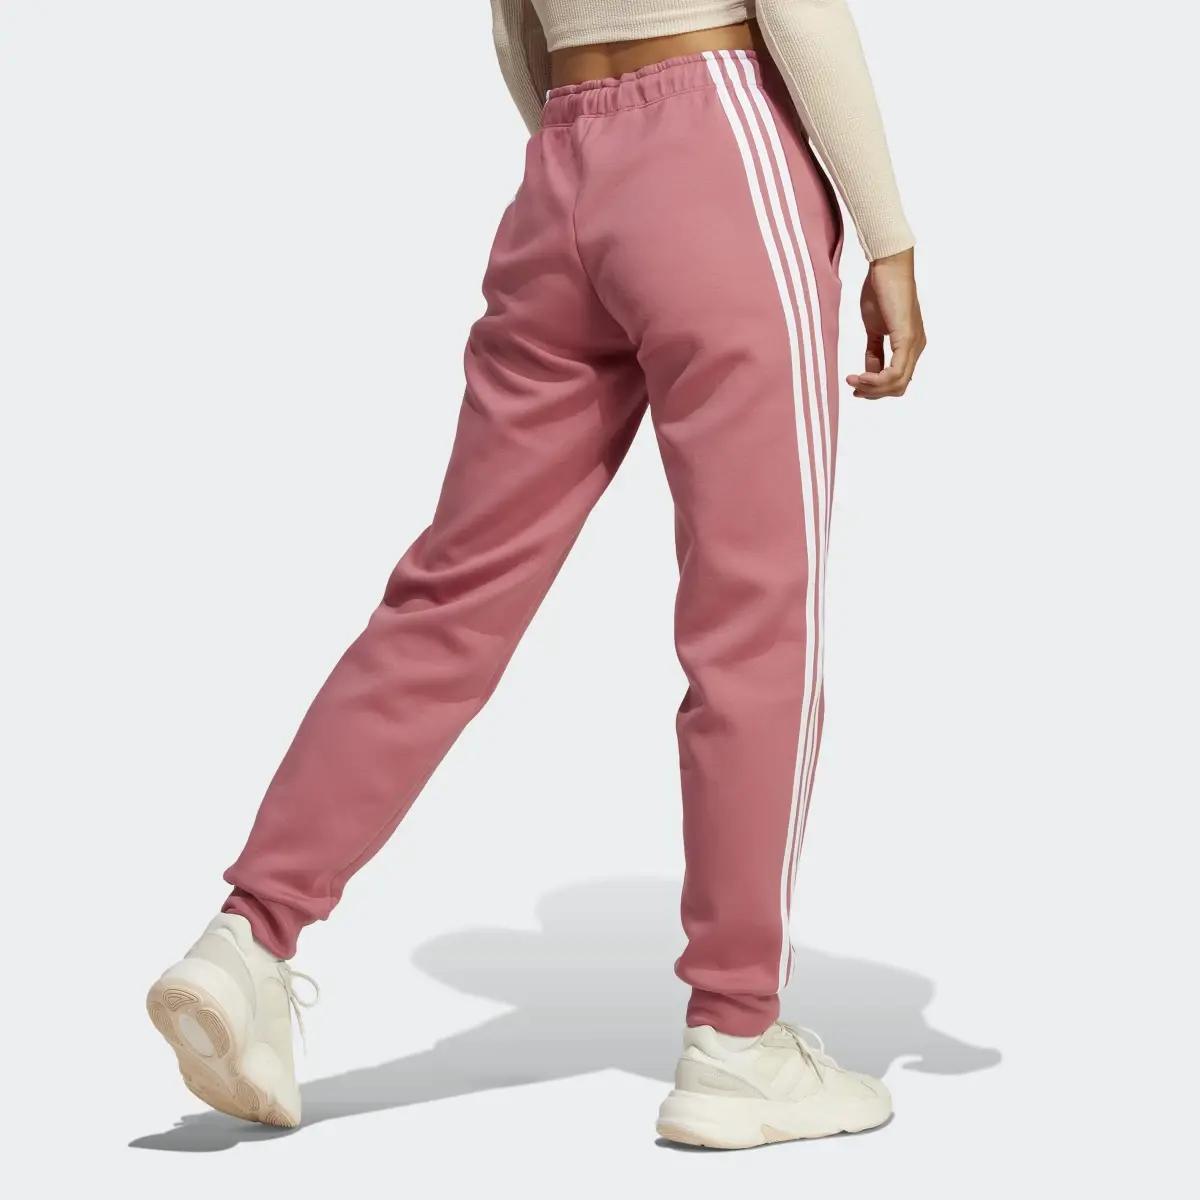 Adidas Future Icons 3-Stripes Regular Pants. 2